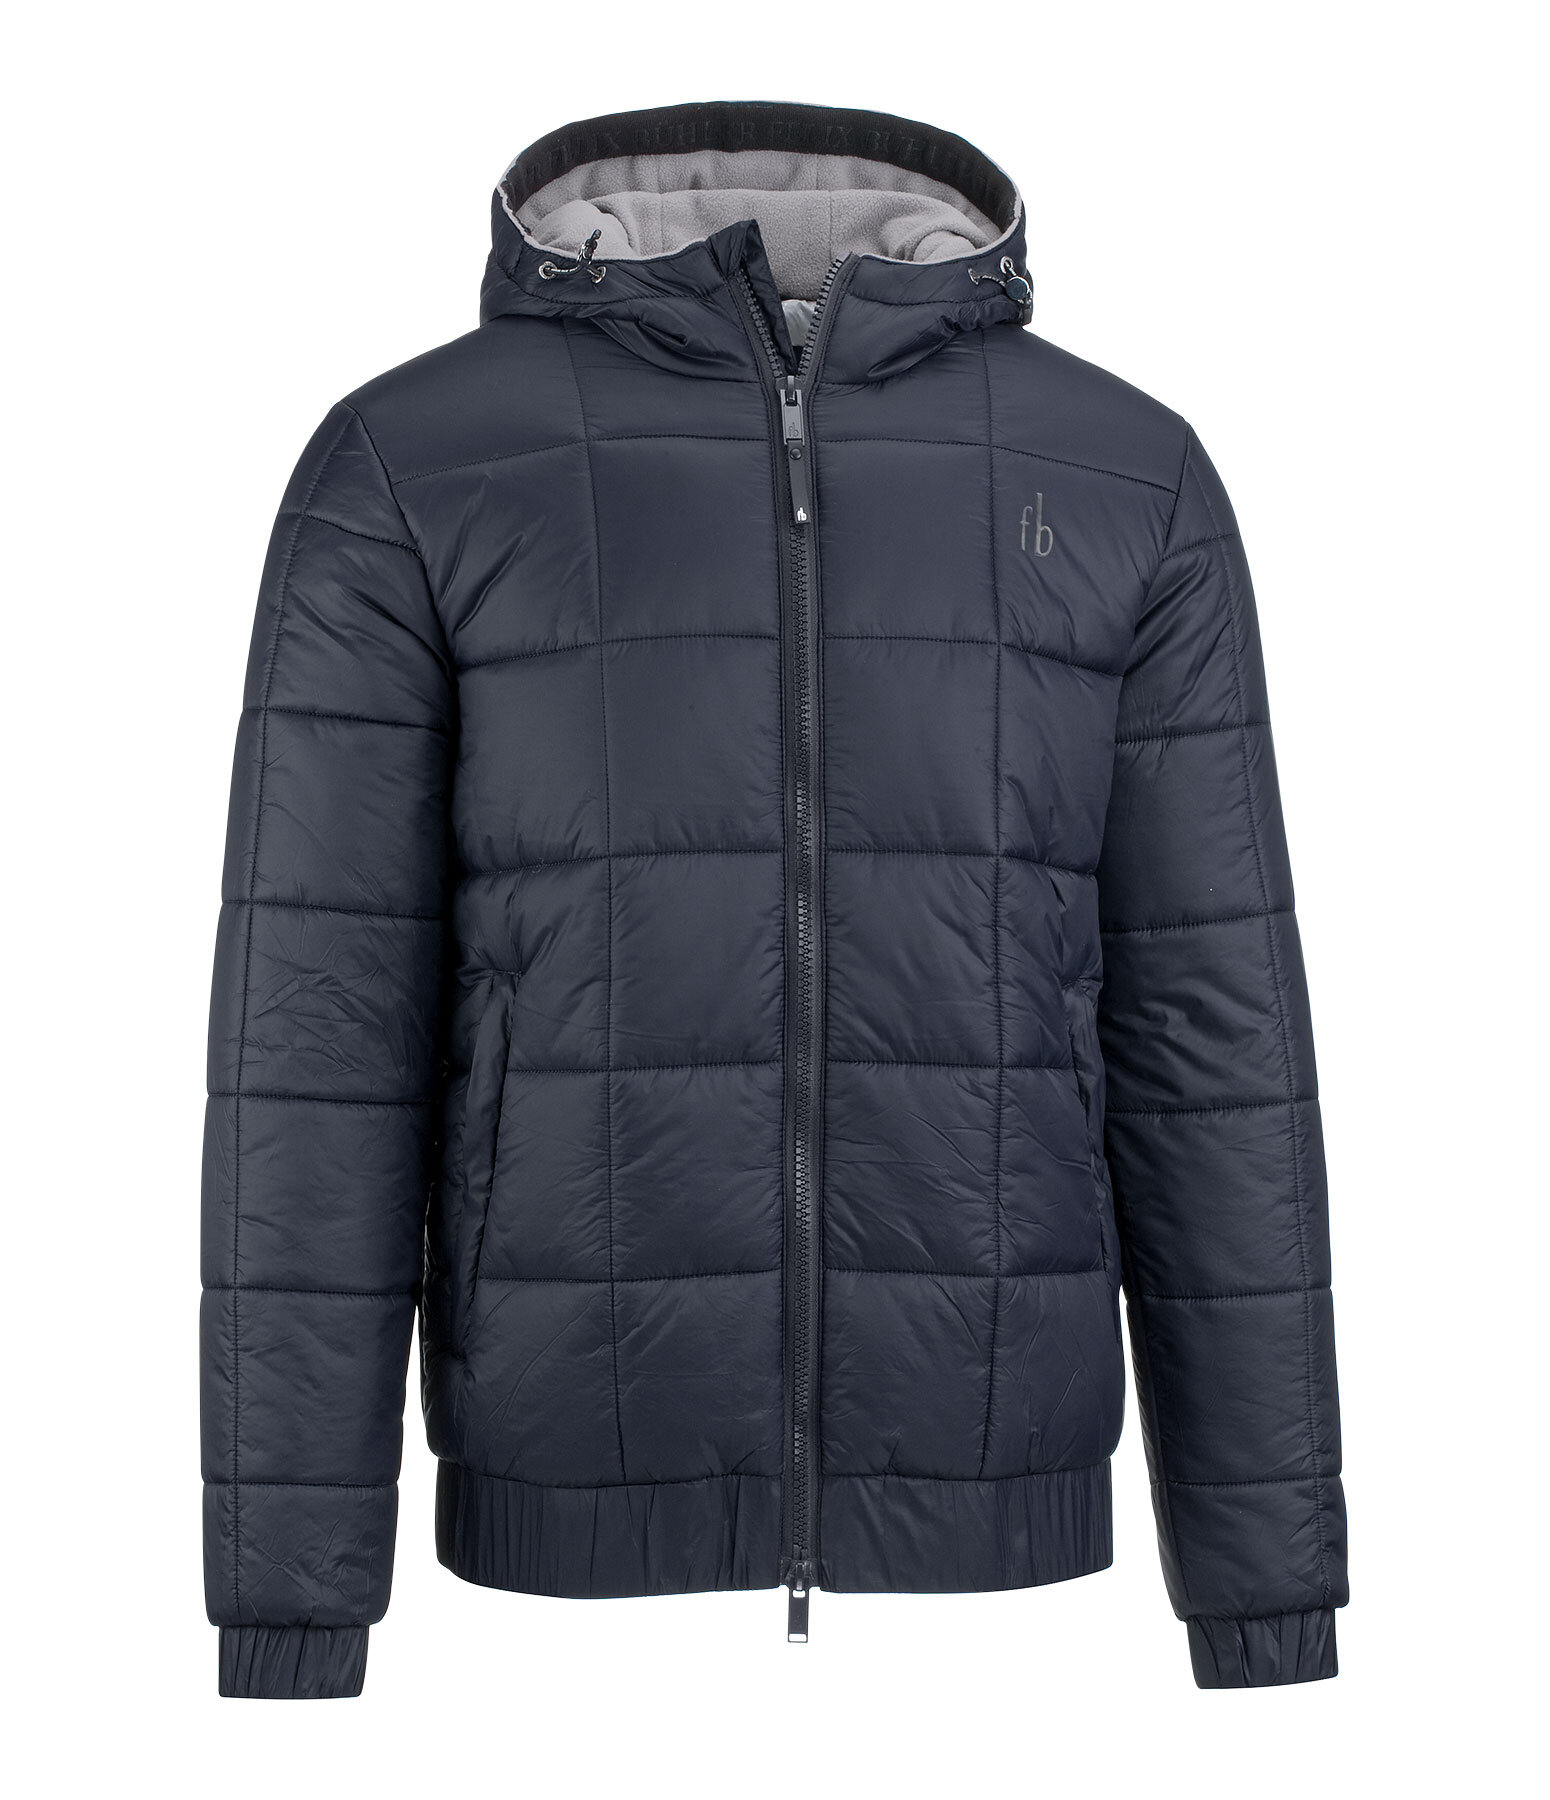 Men's Winter Quilted Jacket Jackson